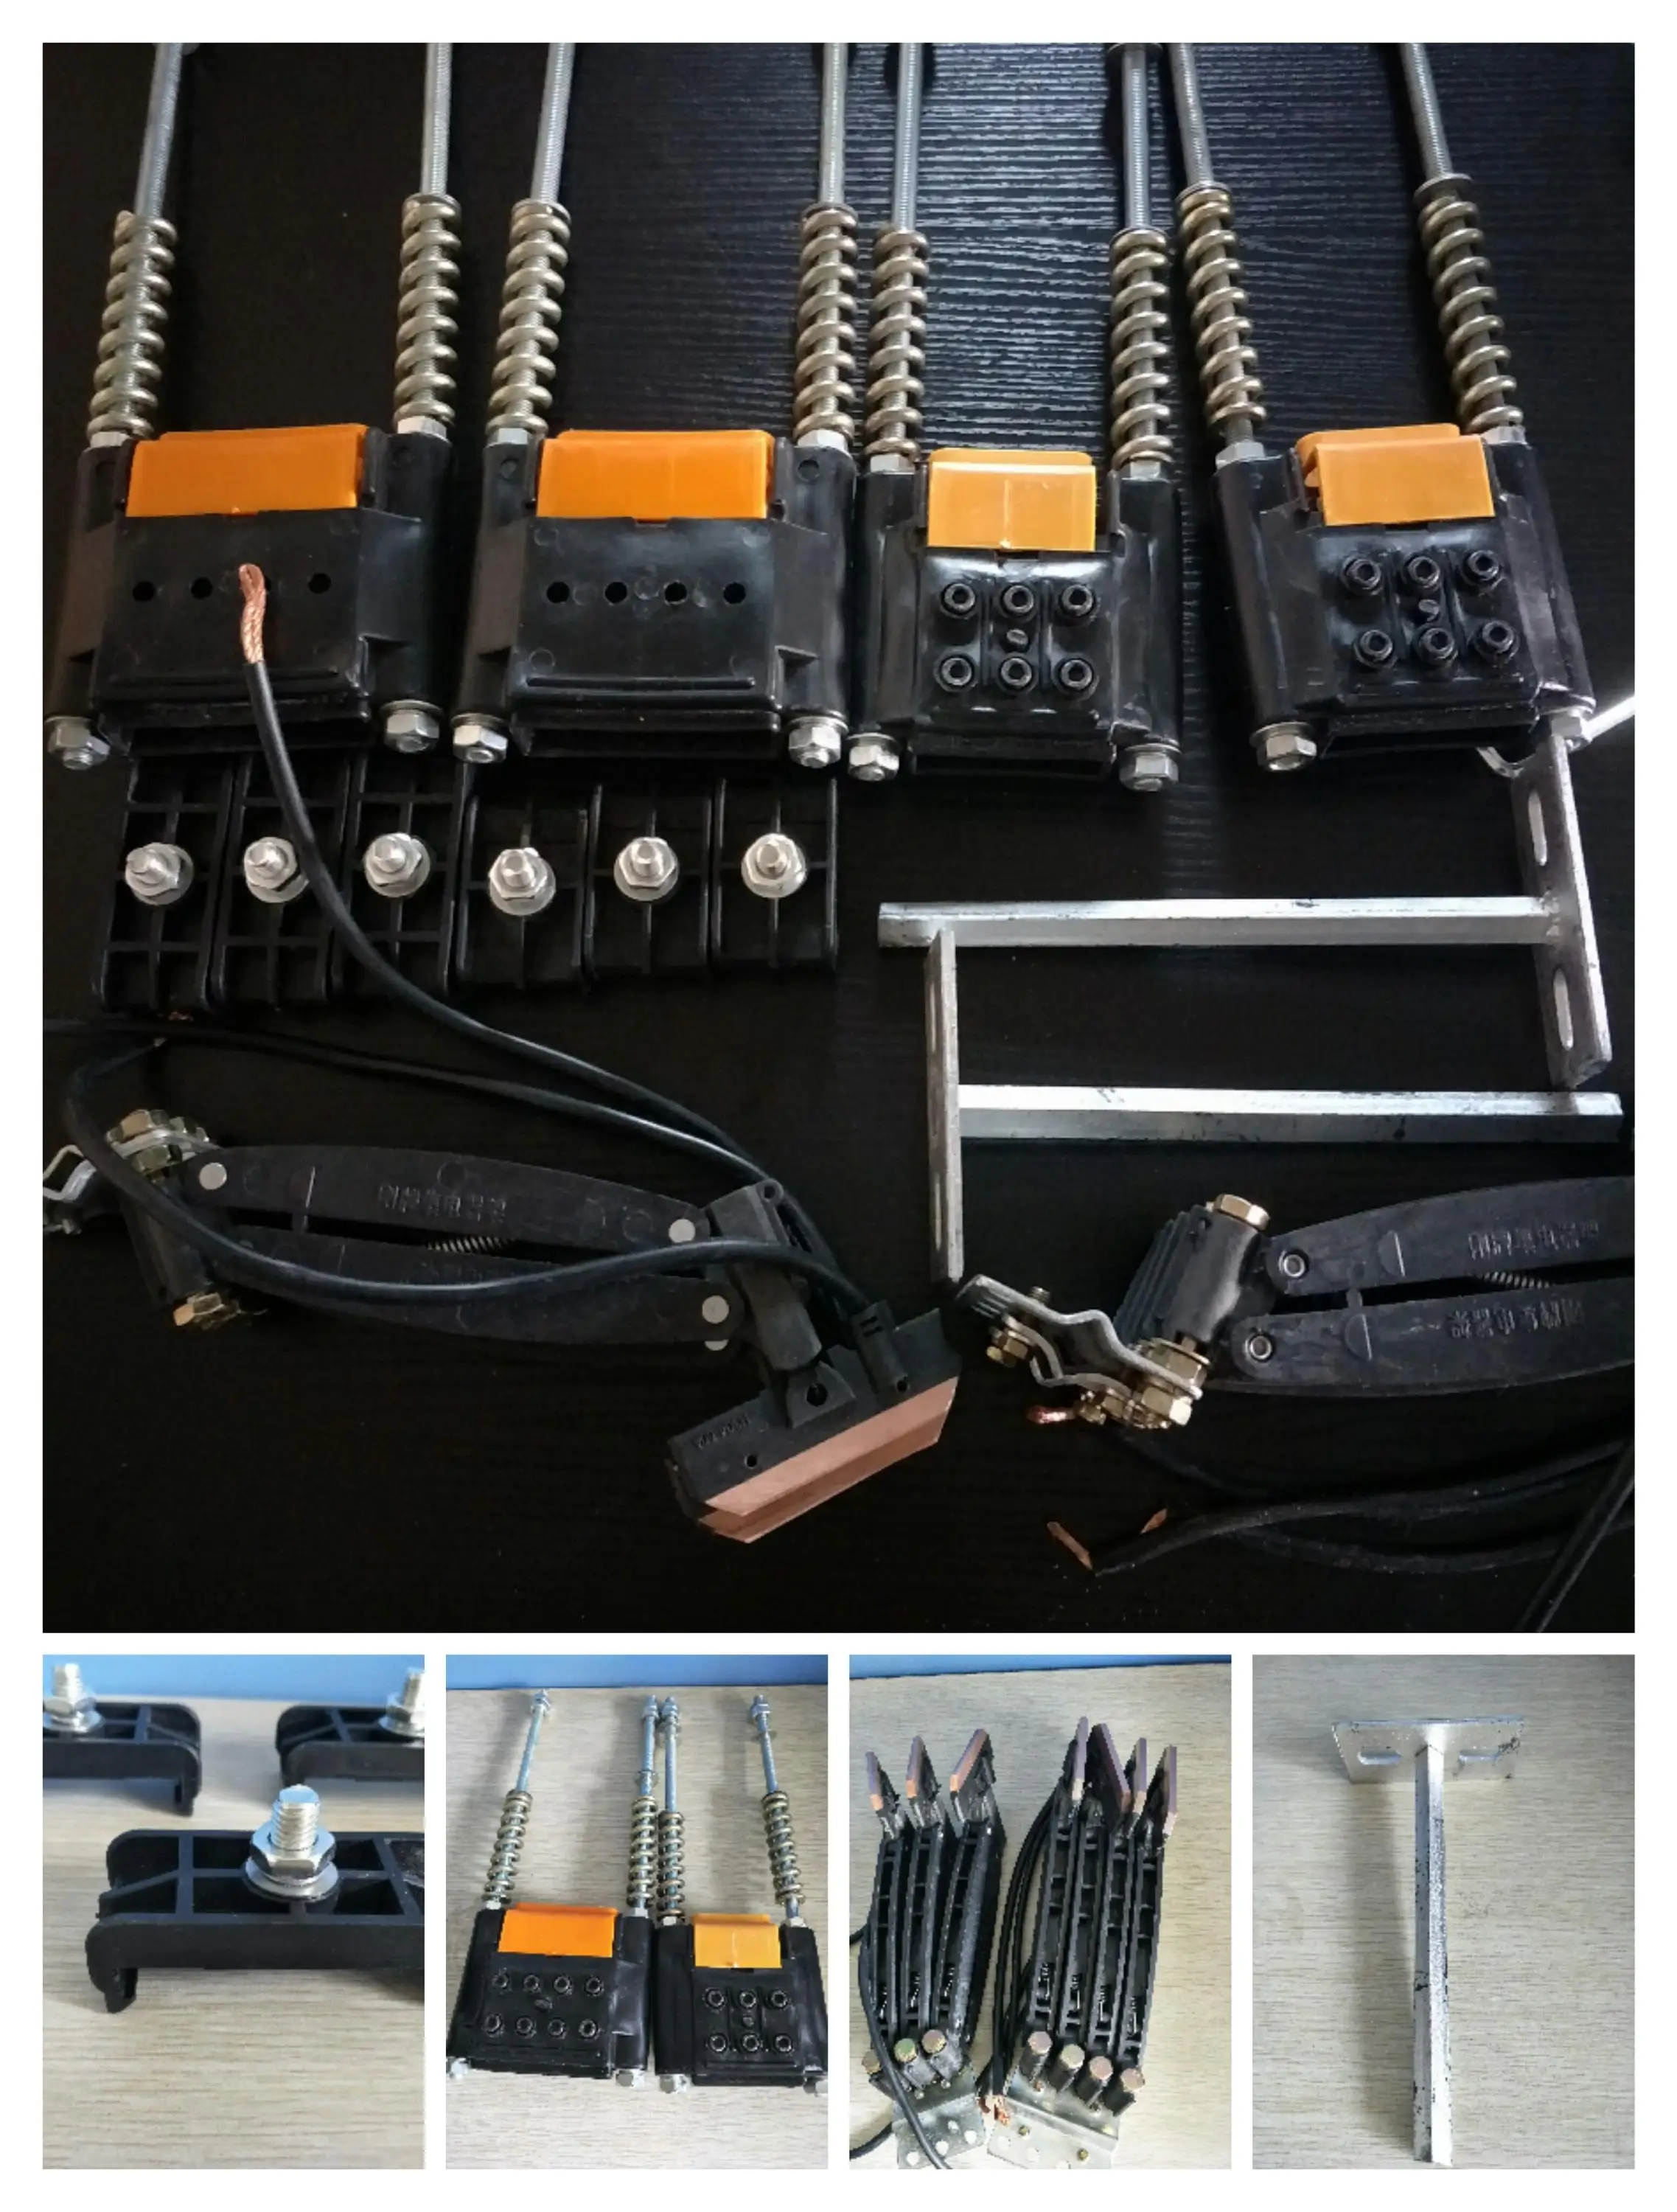 March electrical equipment supplies 50A-140A Flexible electric busbar